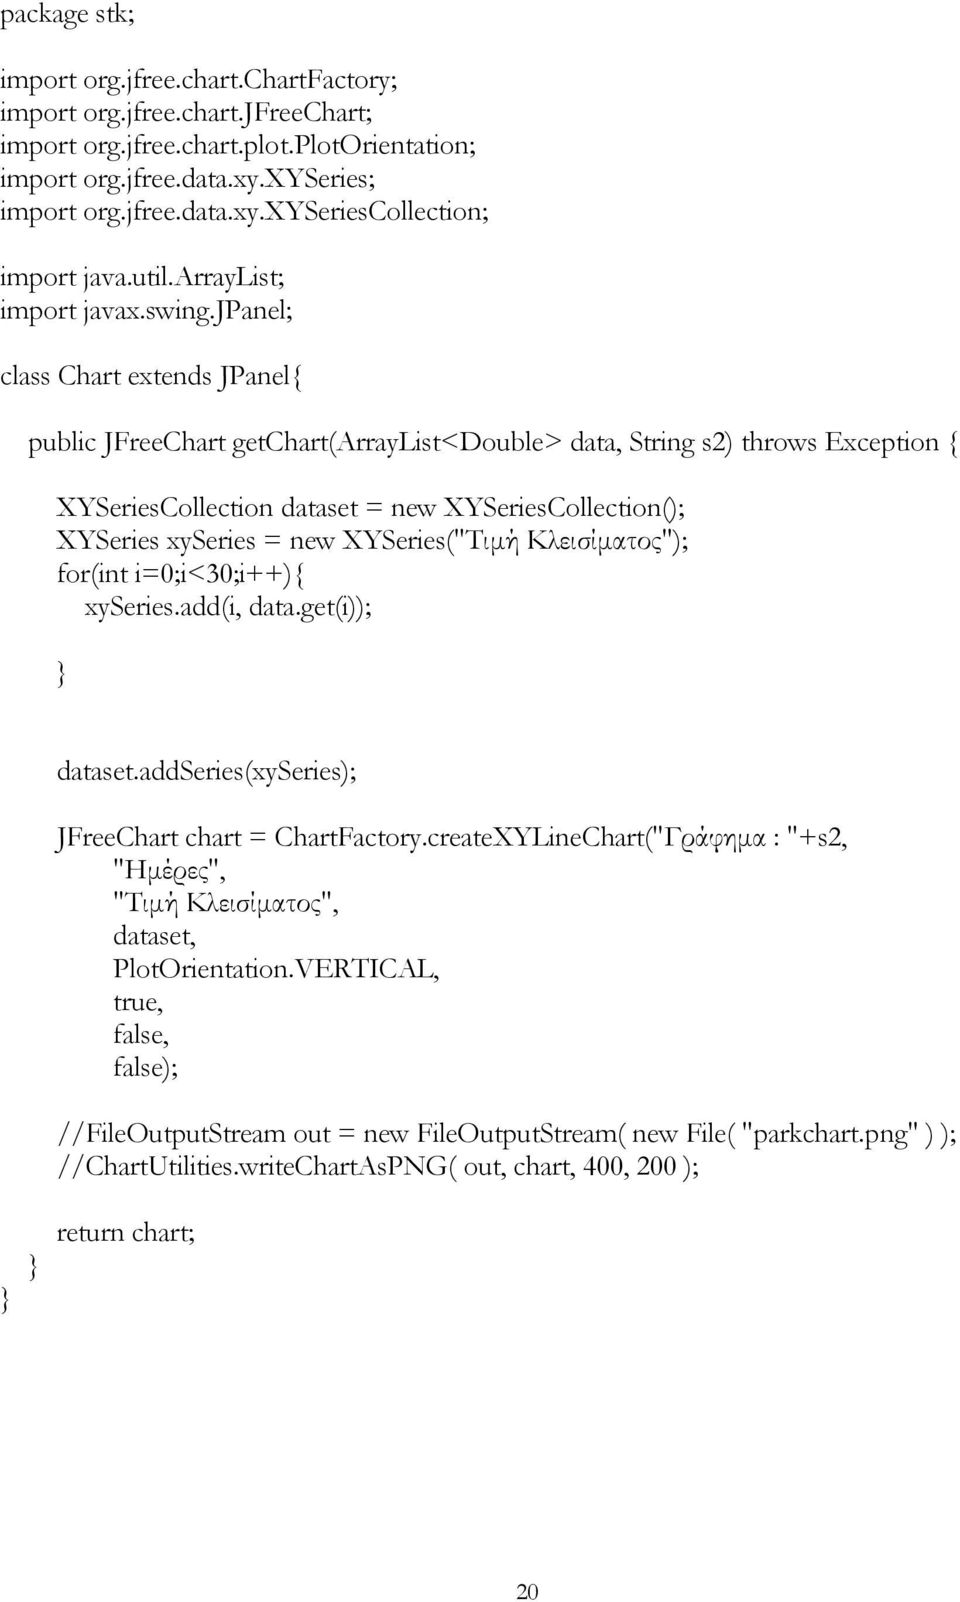 jpanel; class Chart extends JPanel{ public JFreeChart getchart(arraylist<double> data, String s2) throws Exception { XYSeriesCollection dataset = new XYSeriesCollection(); XYSeries xyseries = new